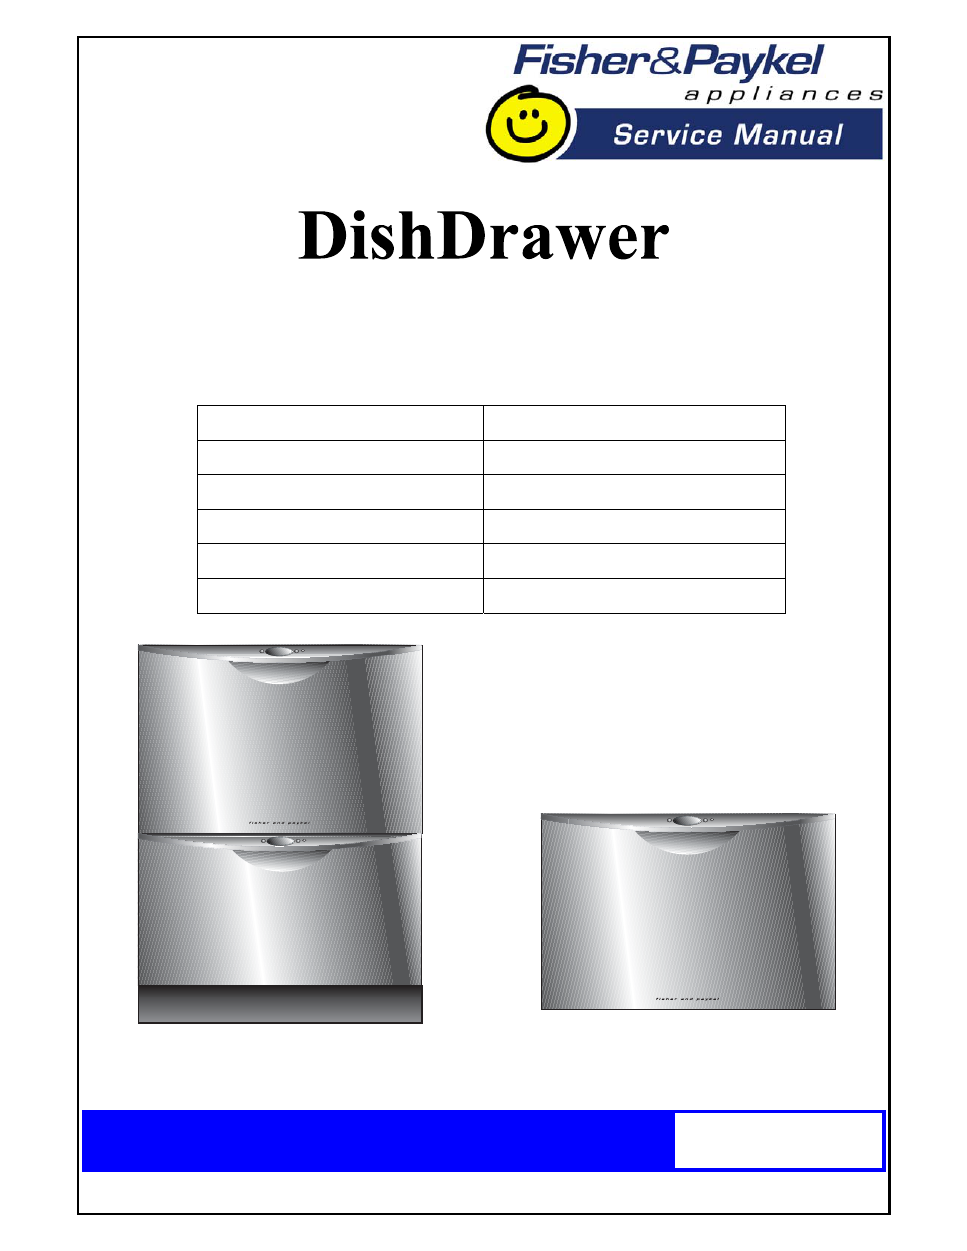 Appliance repair manuals pdf